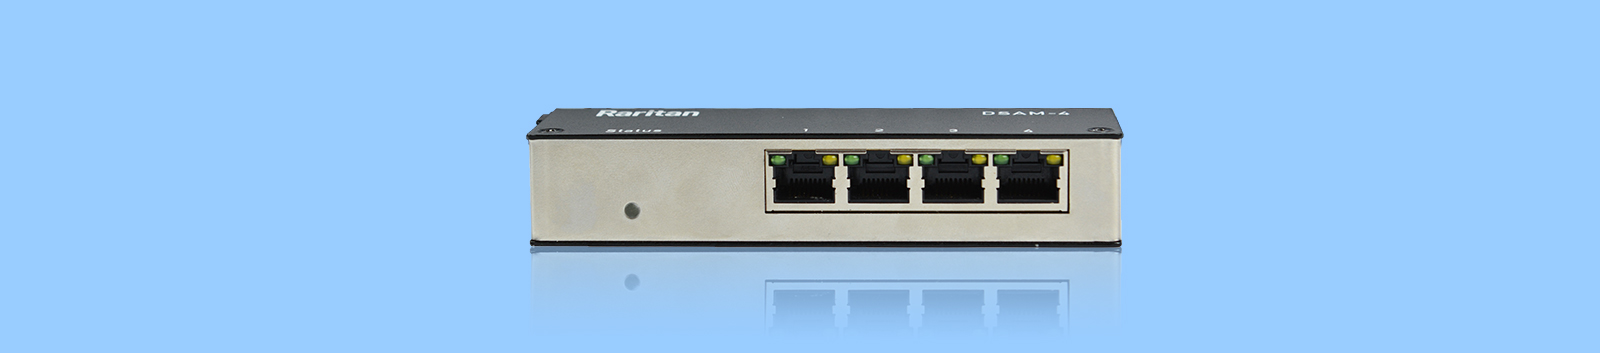 Serial Access Modules (DSAM) for Dominion KX III KVM Switch